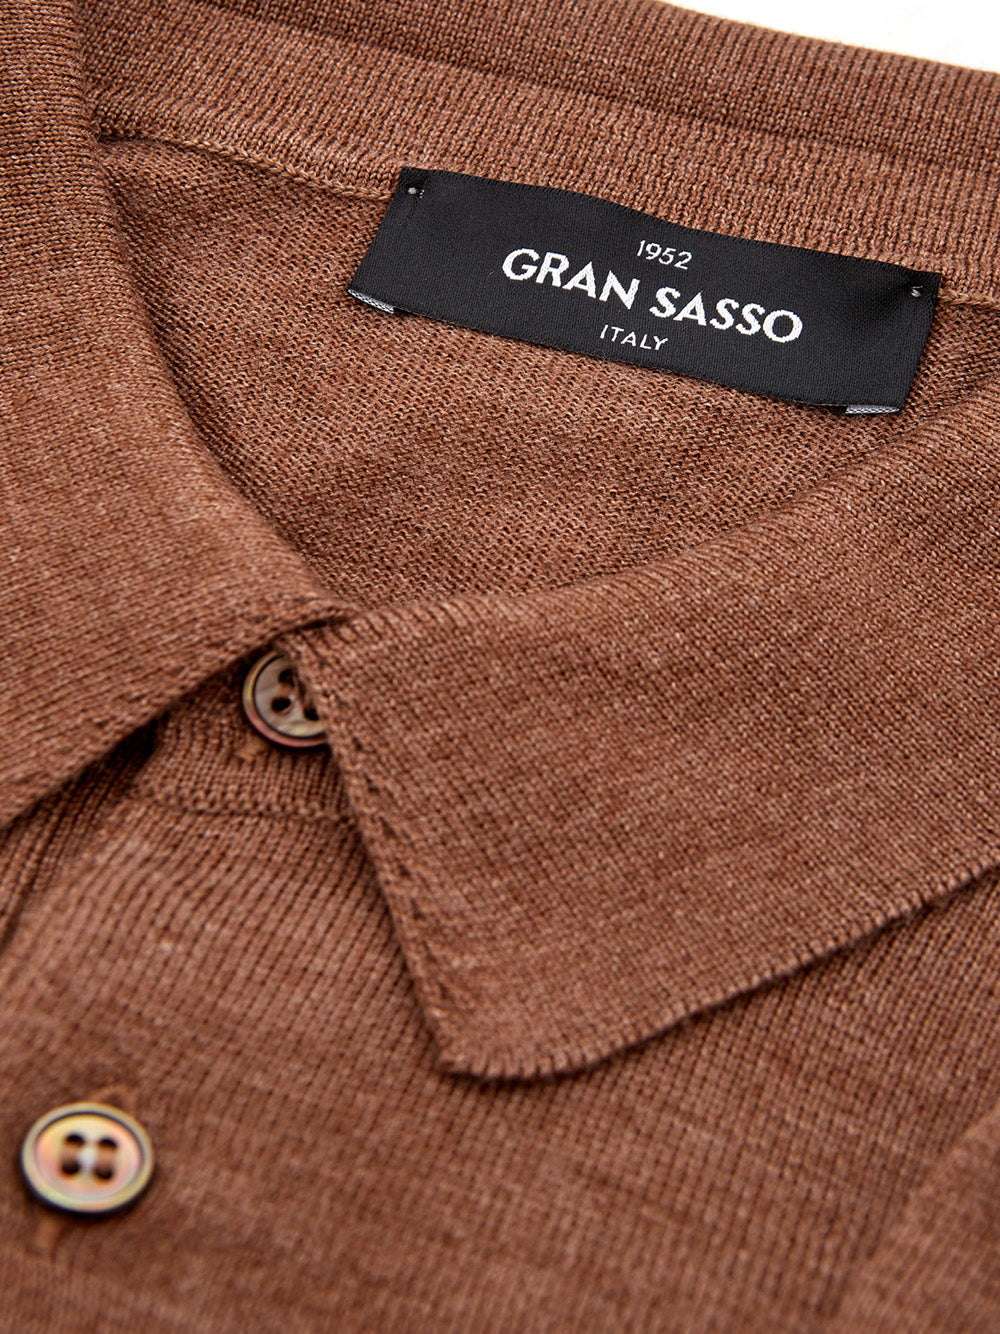 Brown Wool Blend Long Sleeves Polo Shirt